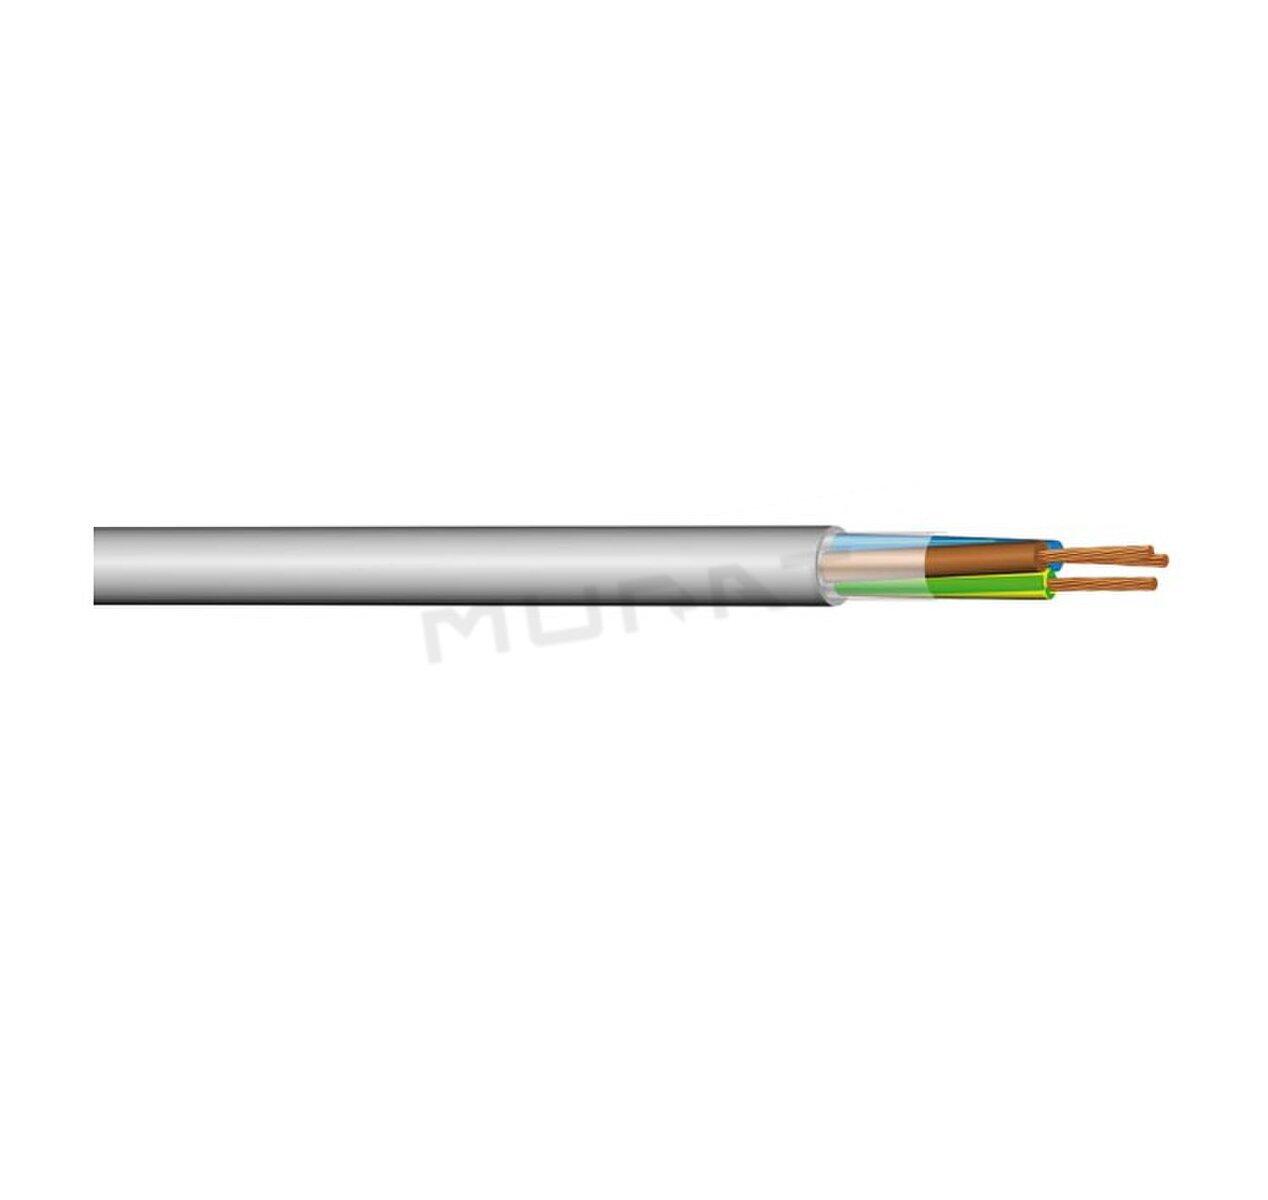 Kábel CMSM 4Bx1,5 mm2